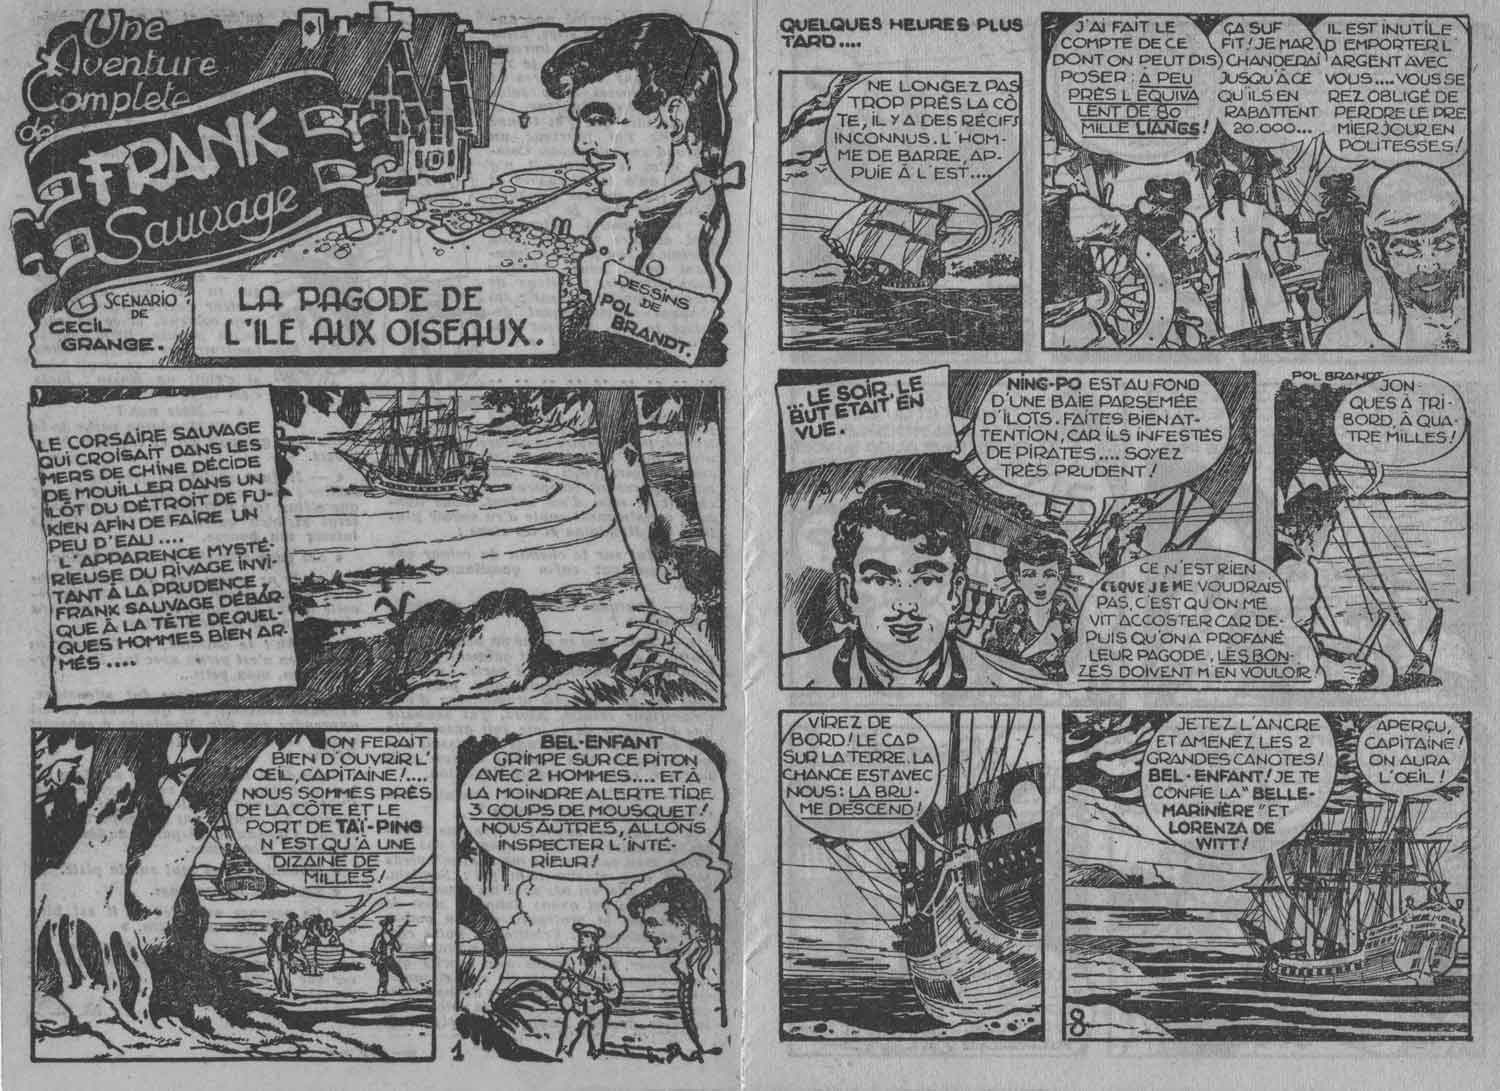 « Frank Sauvage » dans Super Boy n° 47 (juin 1953).